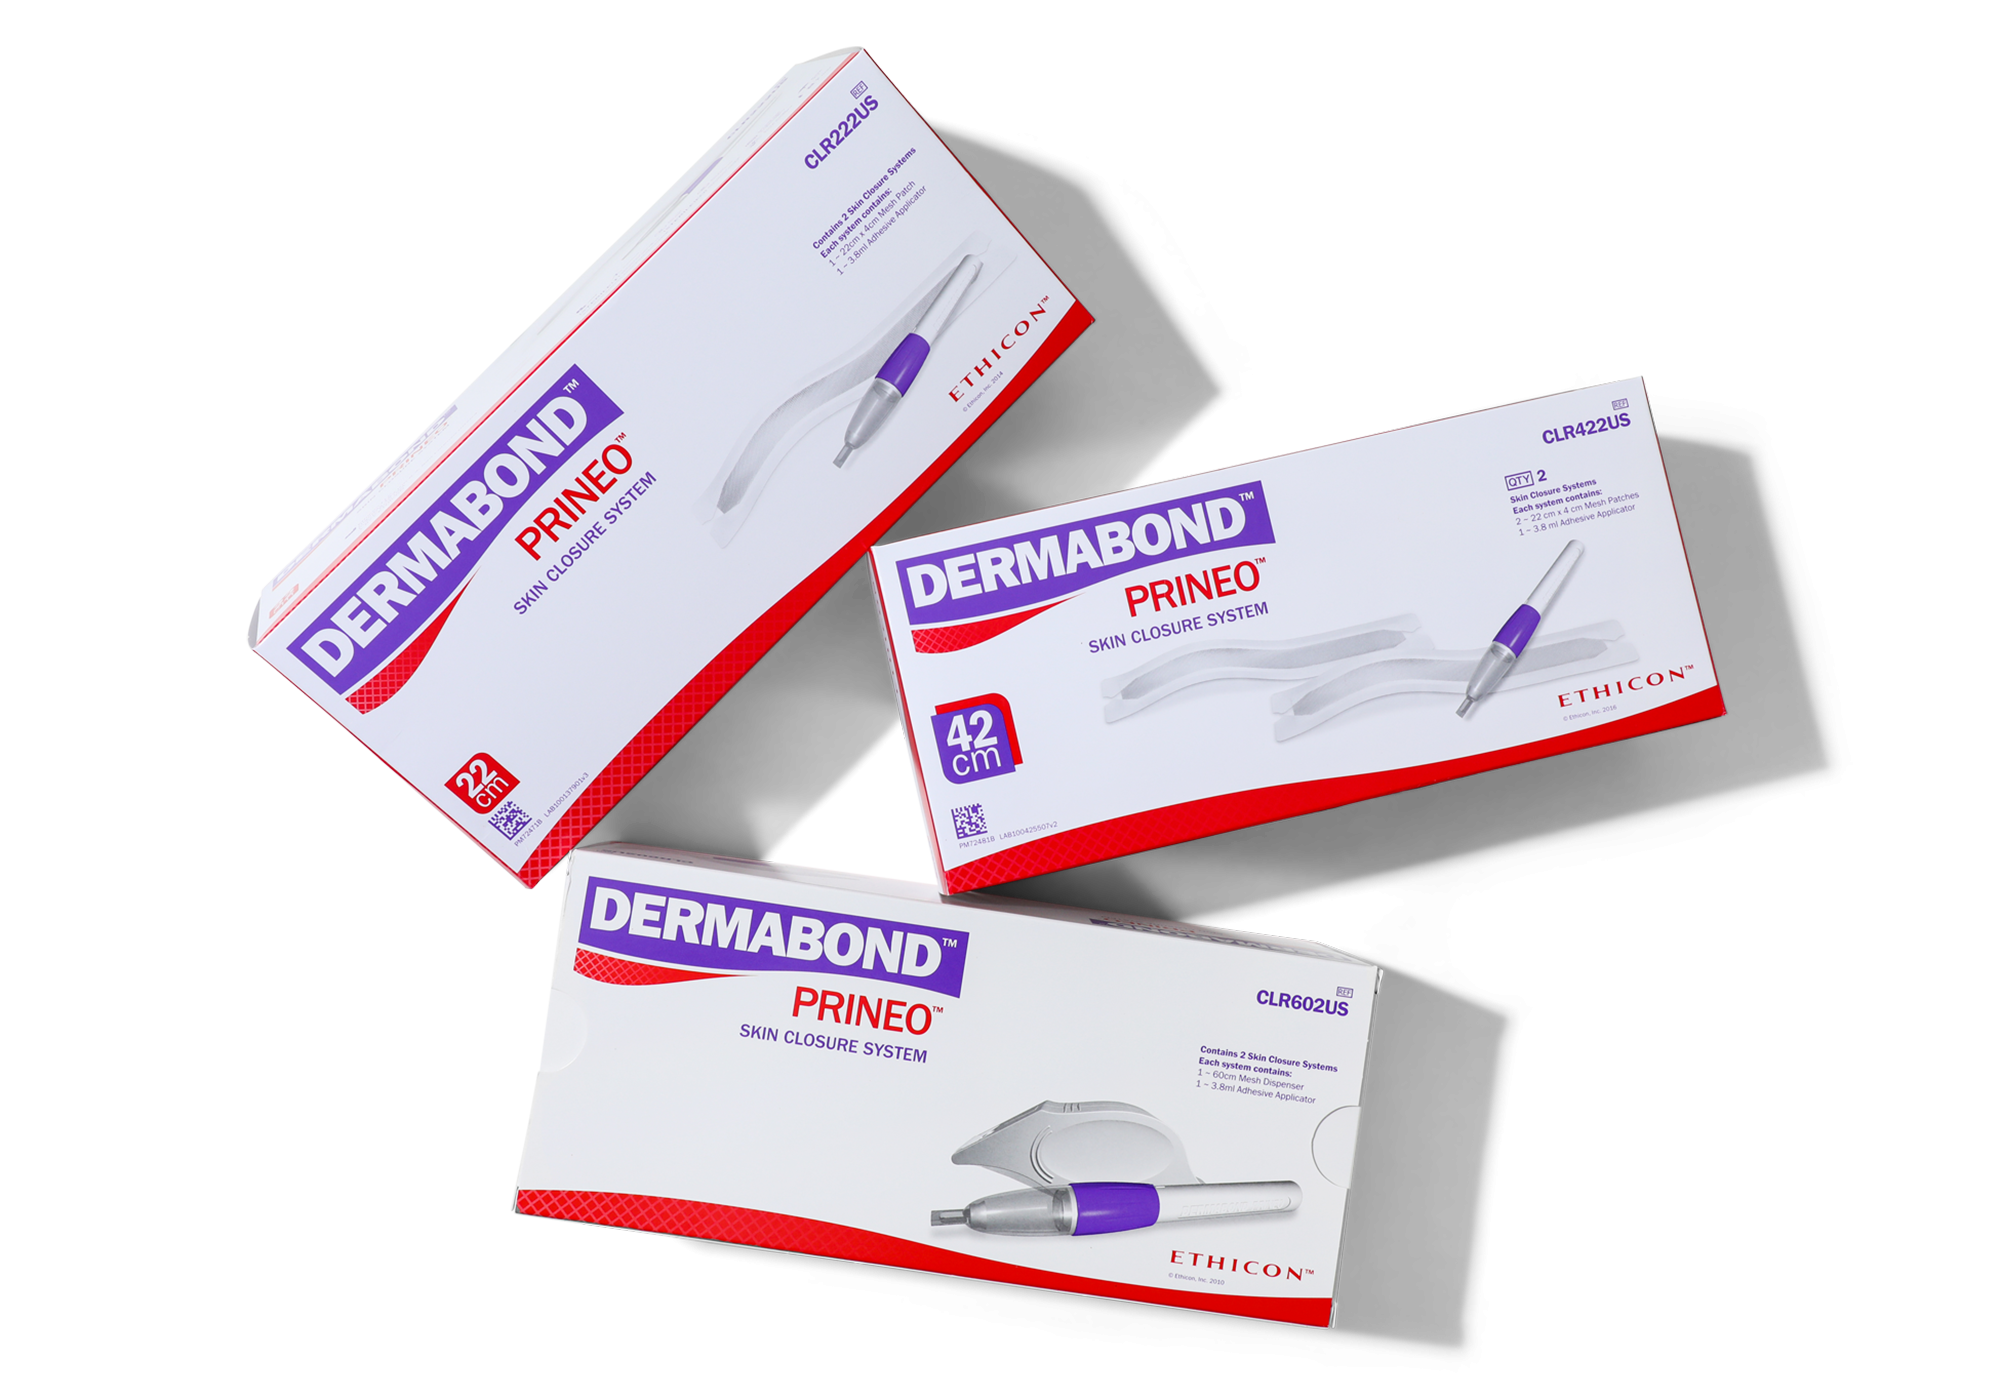 DERMABOND® PRINEO® Skin Closure System